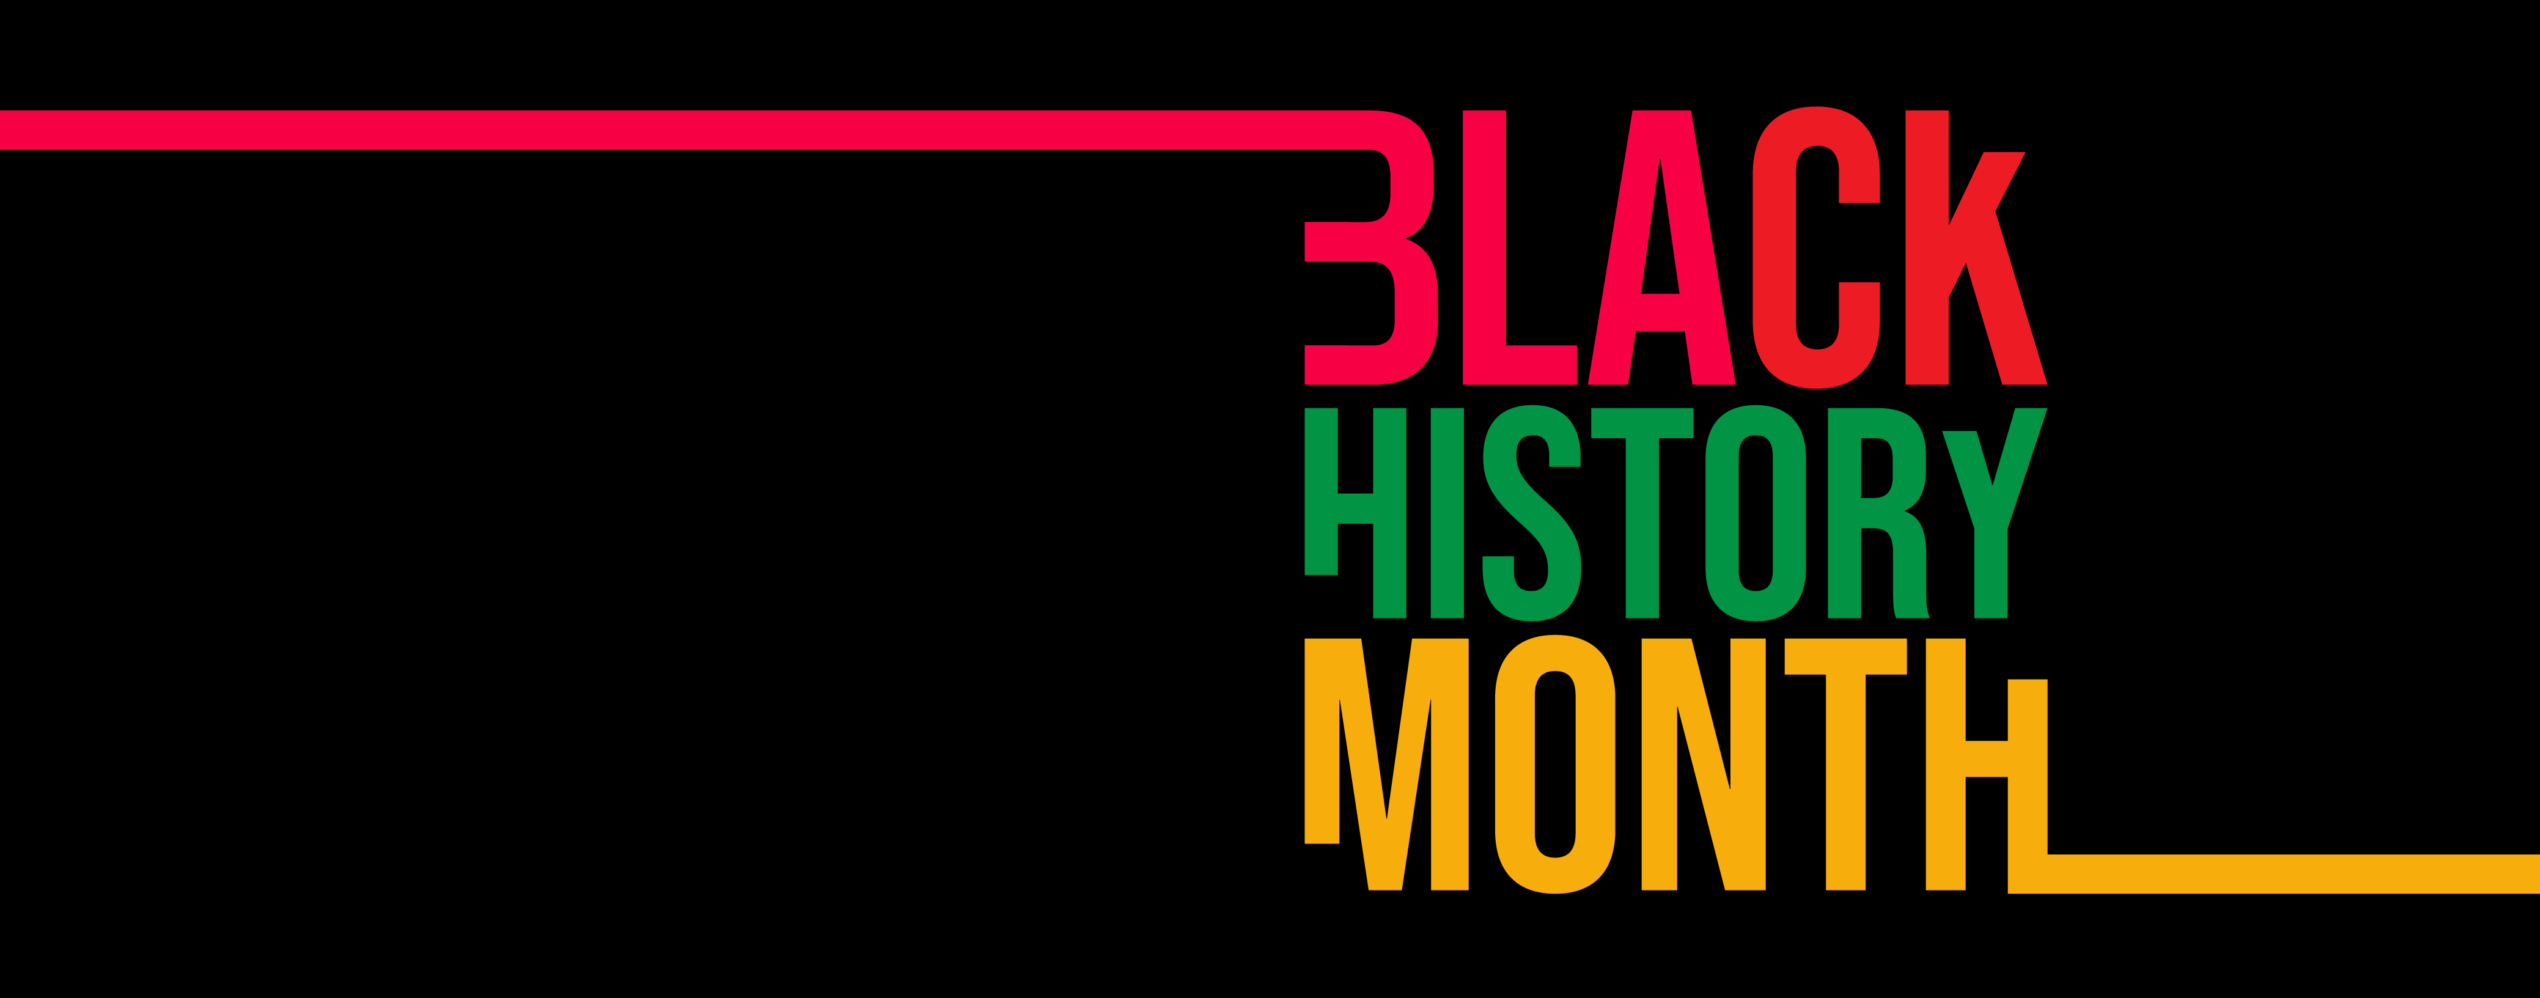 Black History Month - Purdue University Northwest